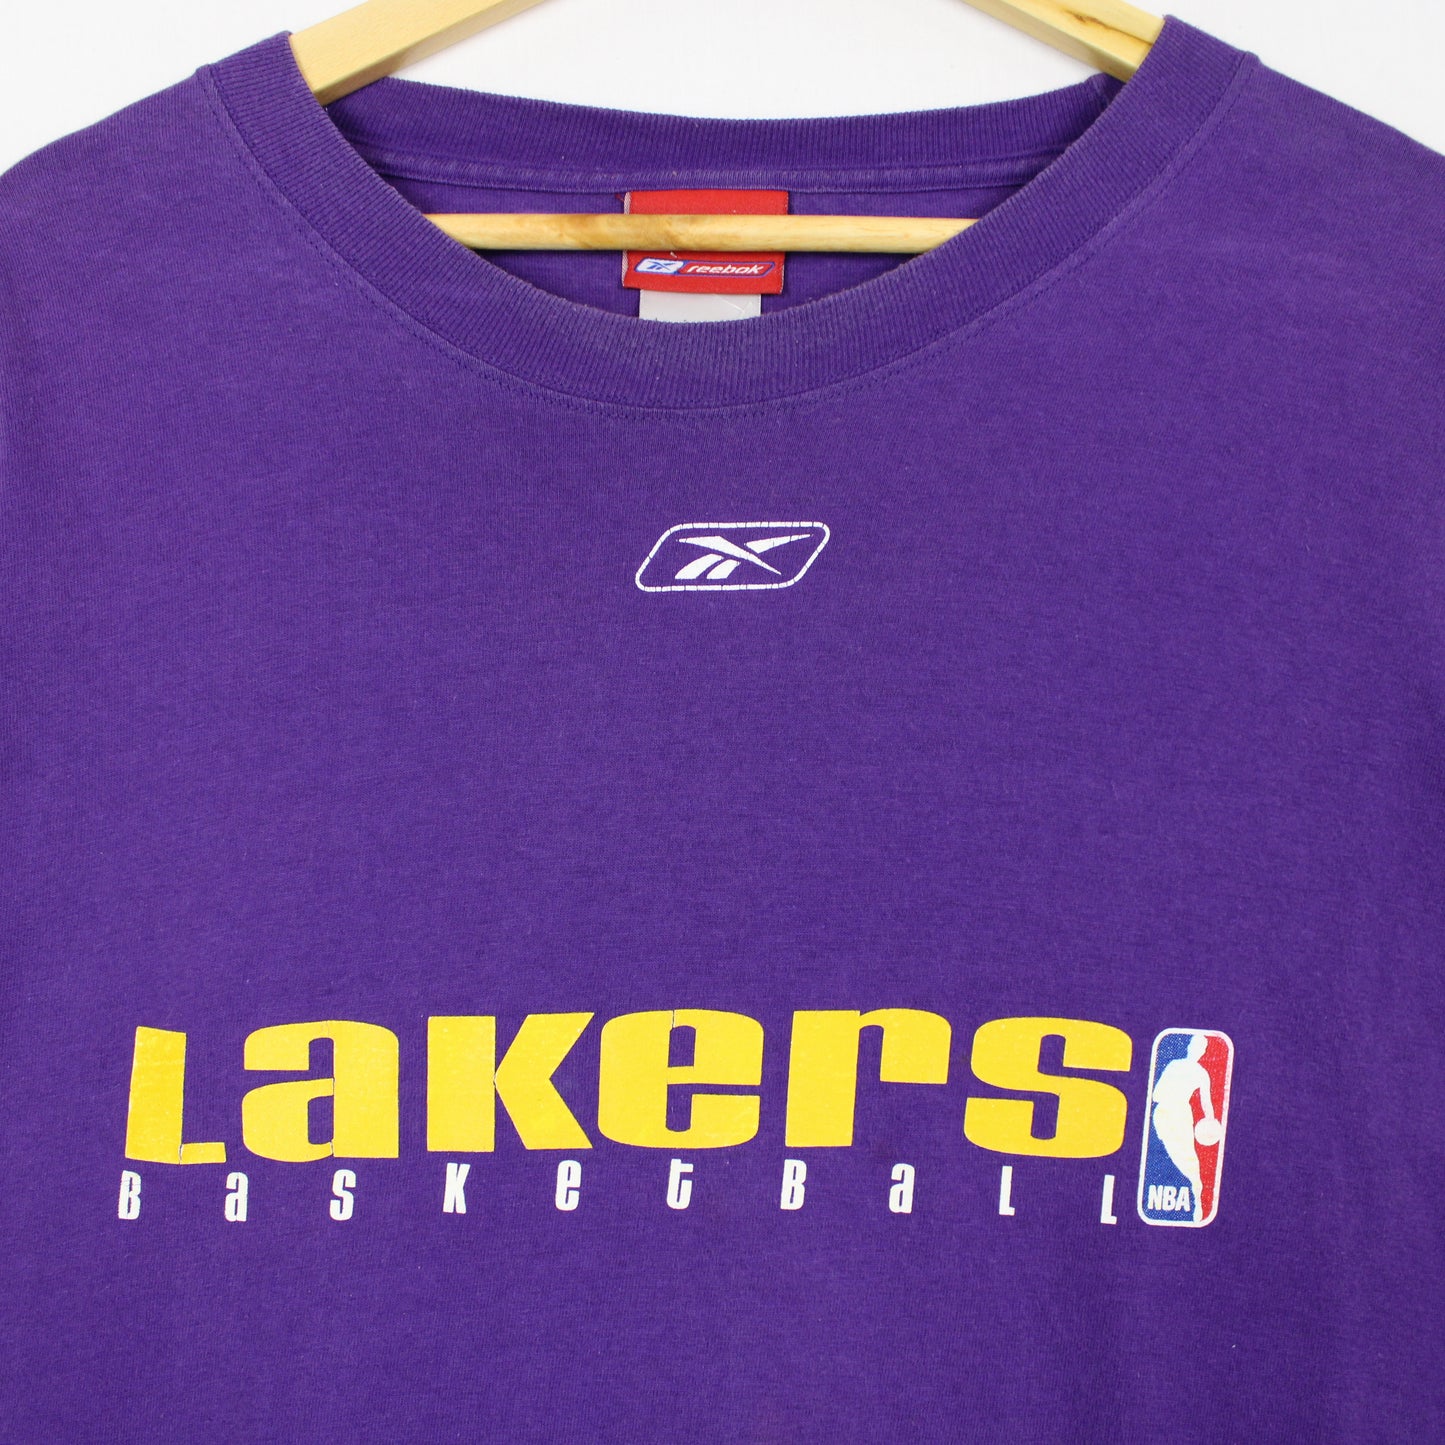 Vintage LA Lakers NBA Longsleeve Reebok Tee - XXXL